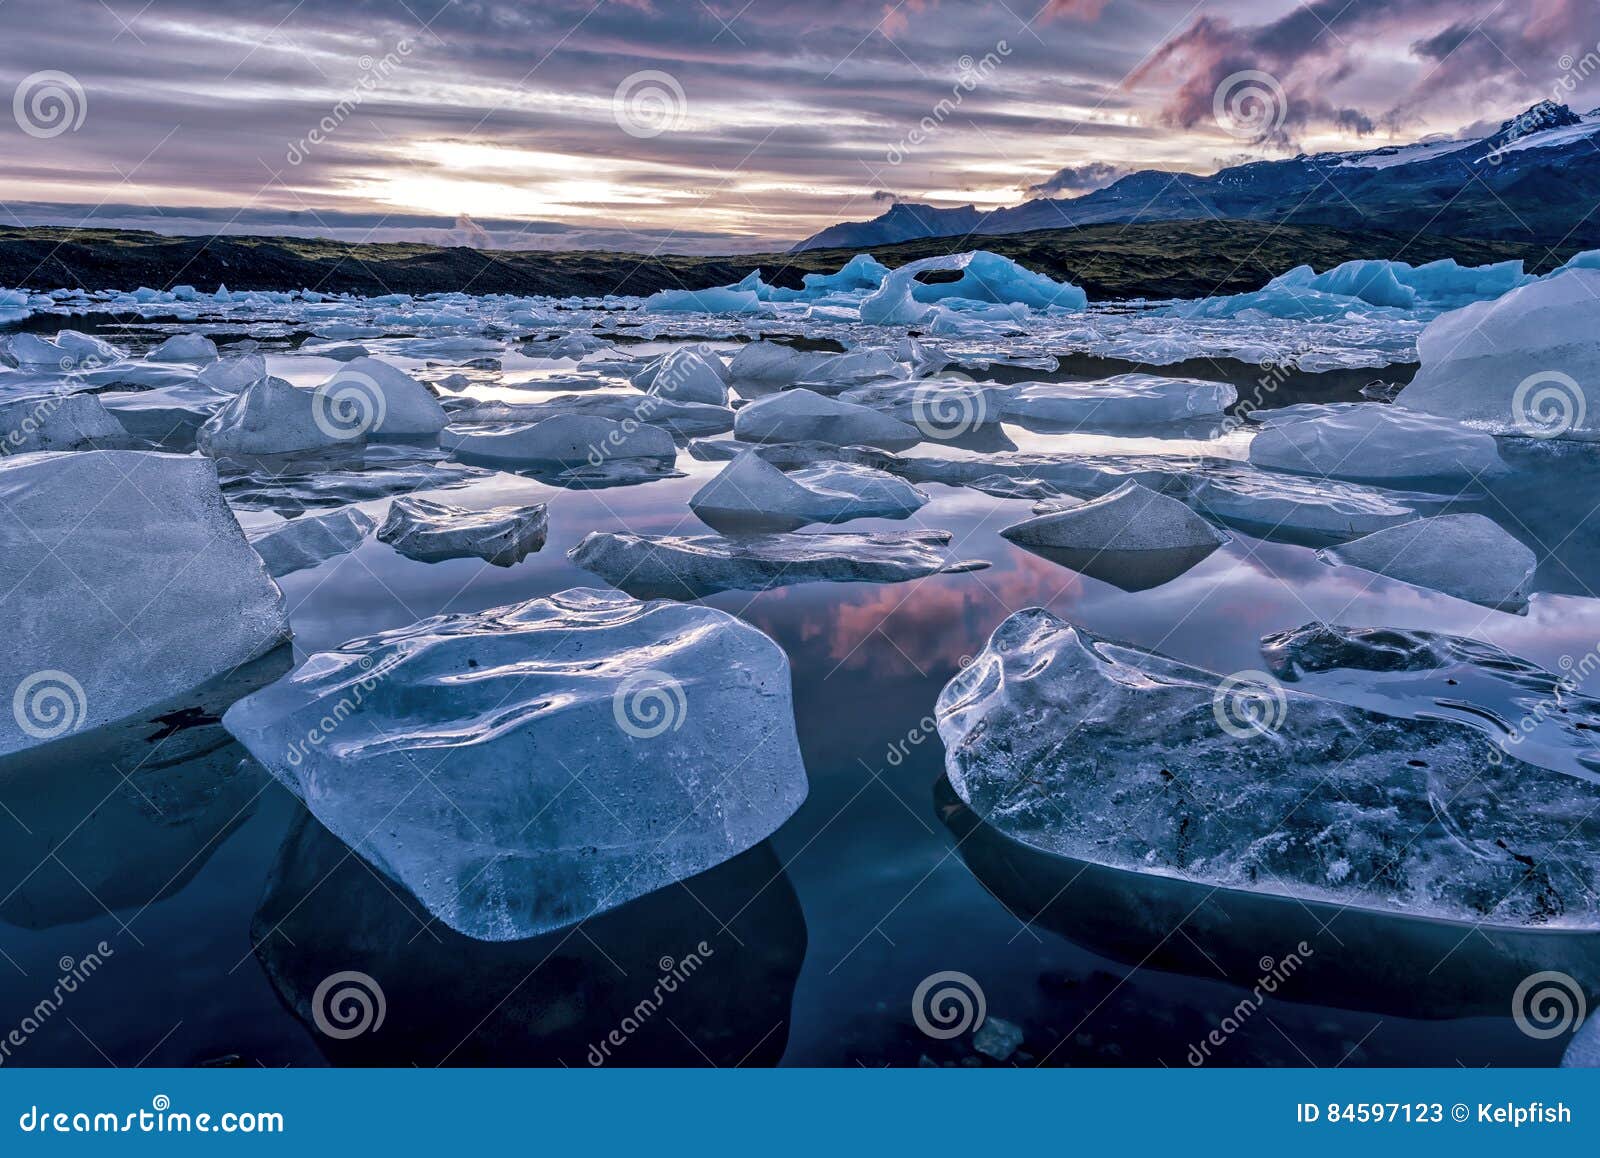 icebergs floating in jokulsarlon glacial lagoon